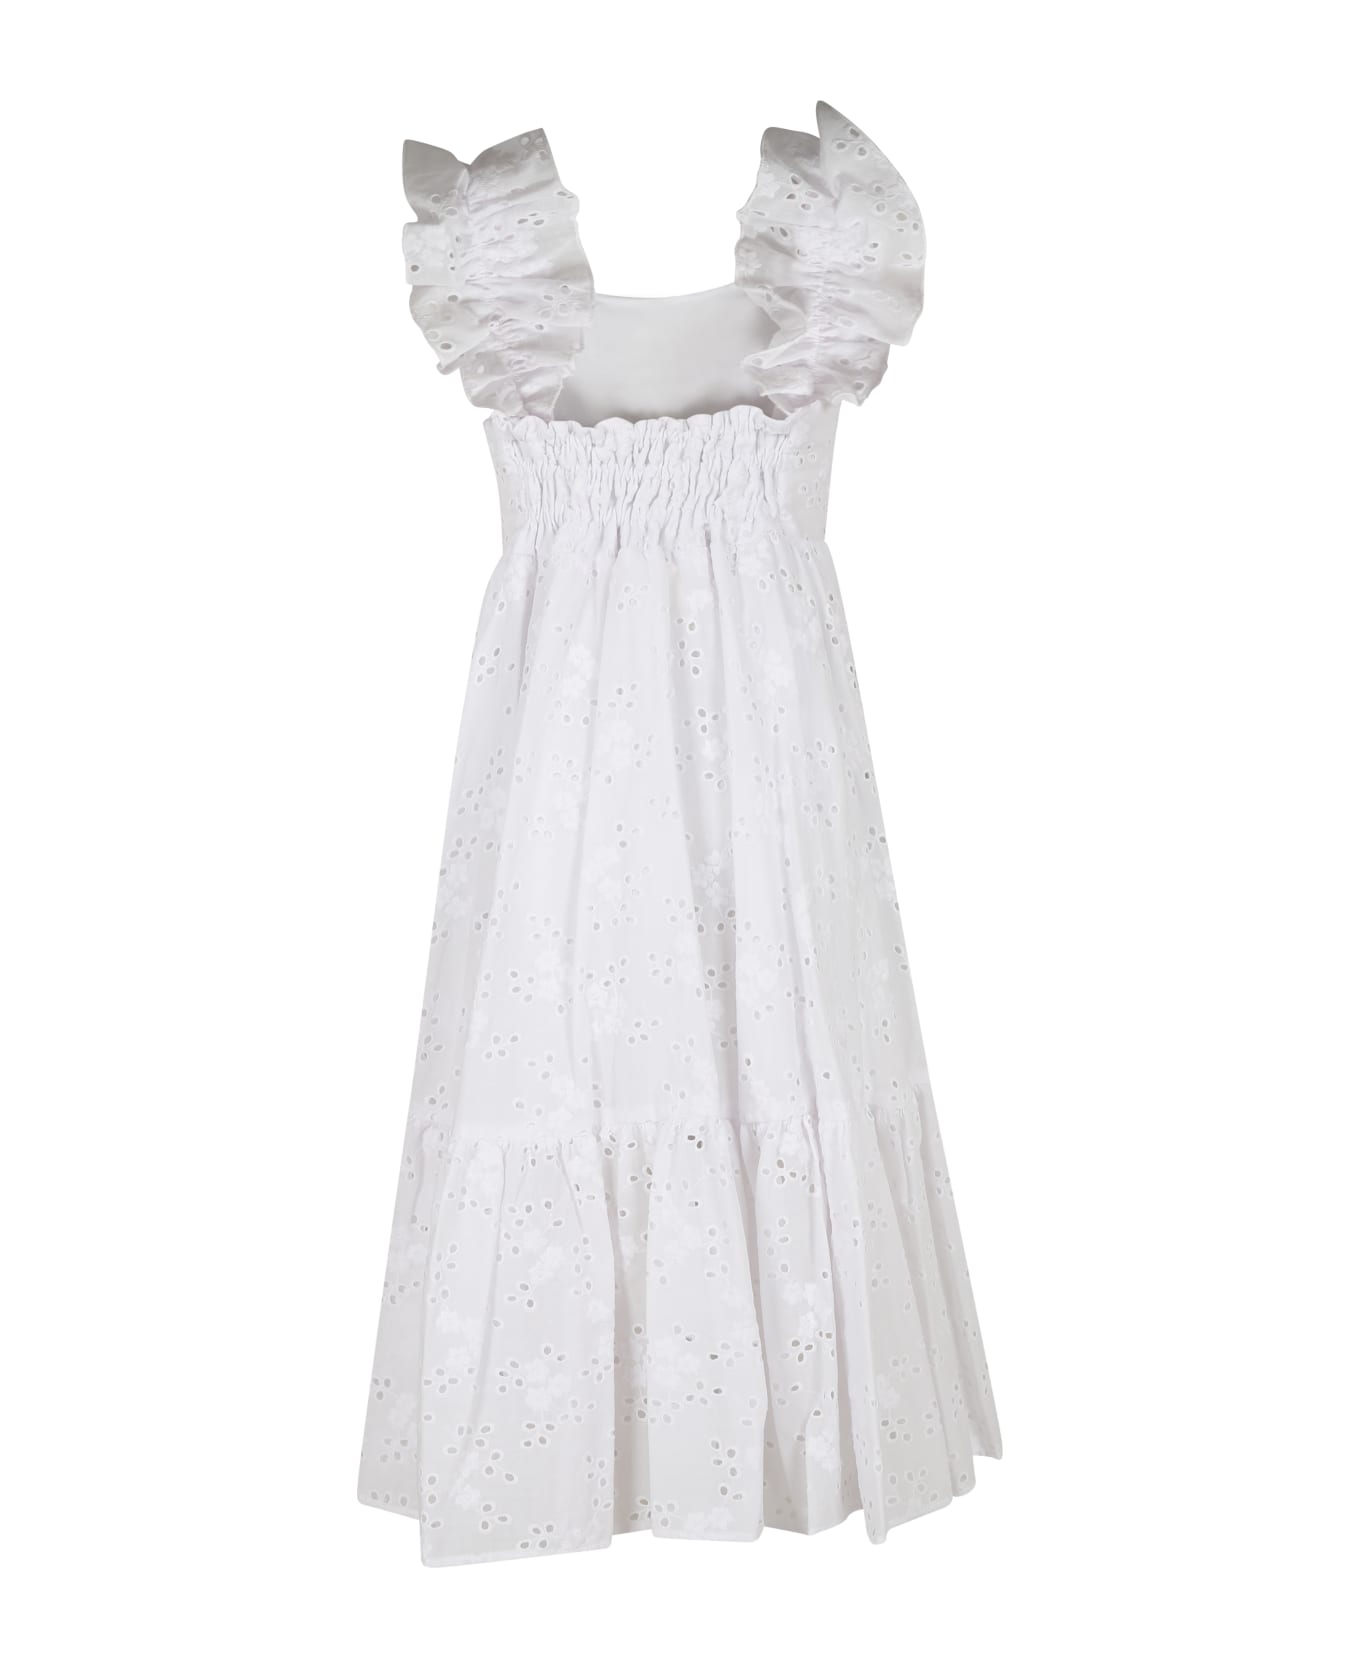 Monnalisa White Dress For Girl With Heart - White